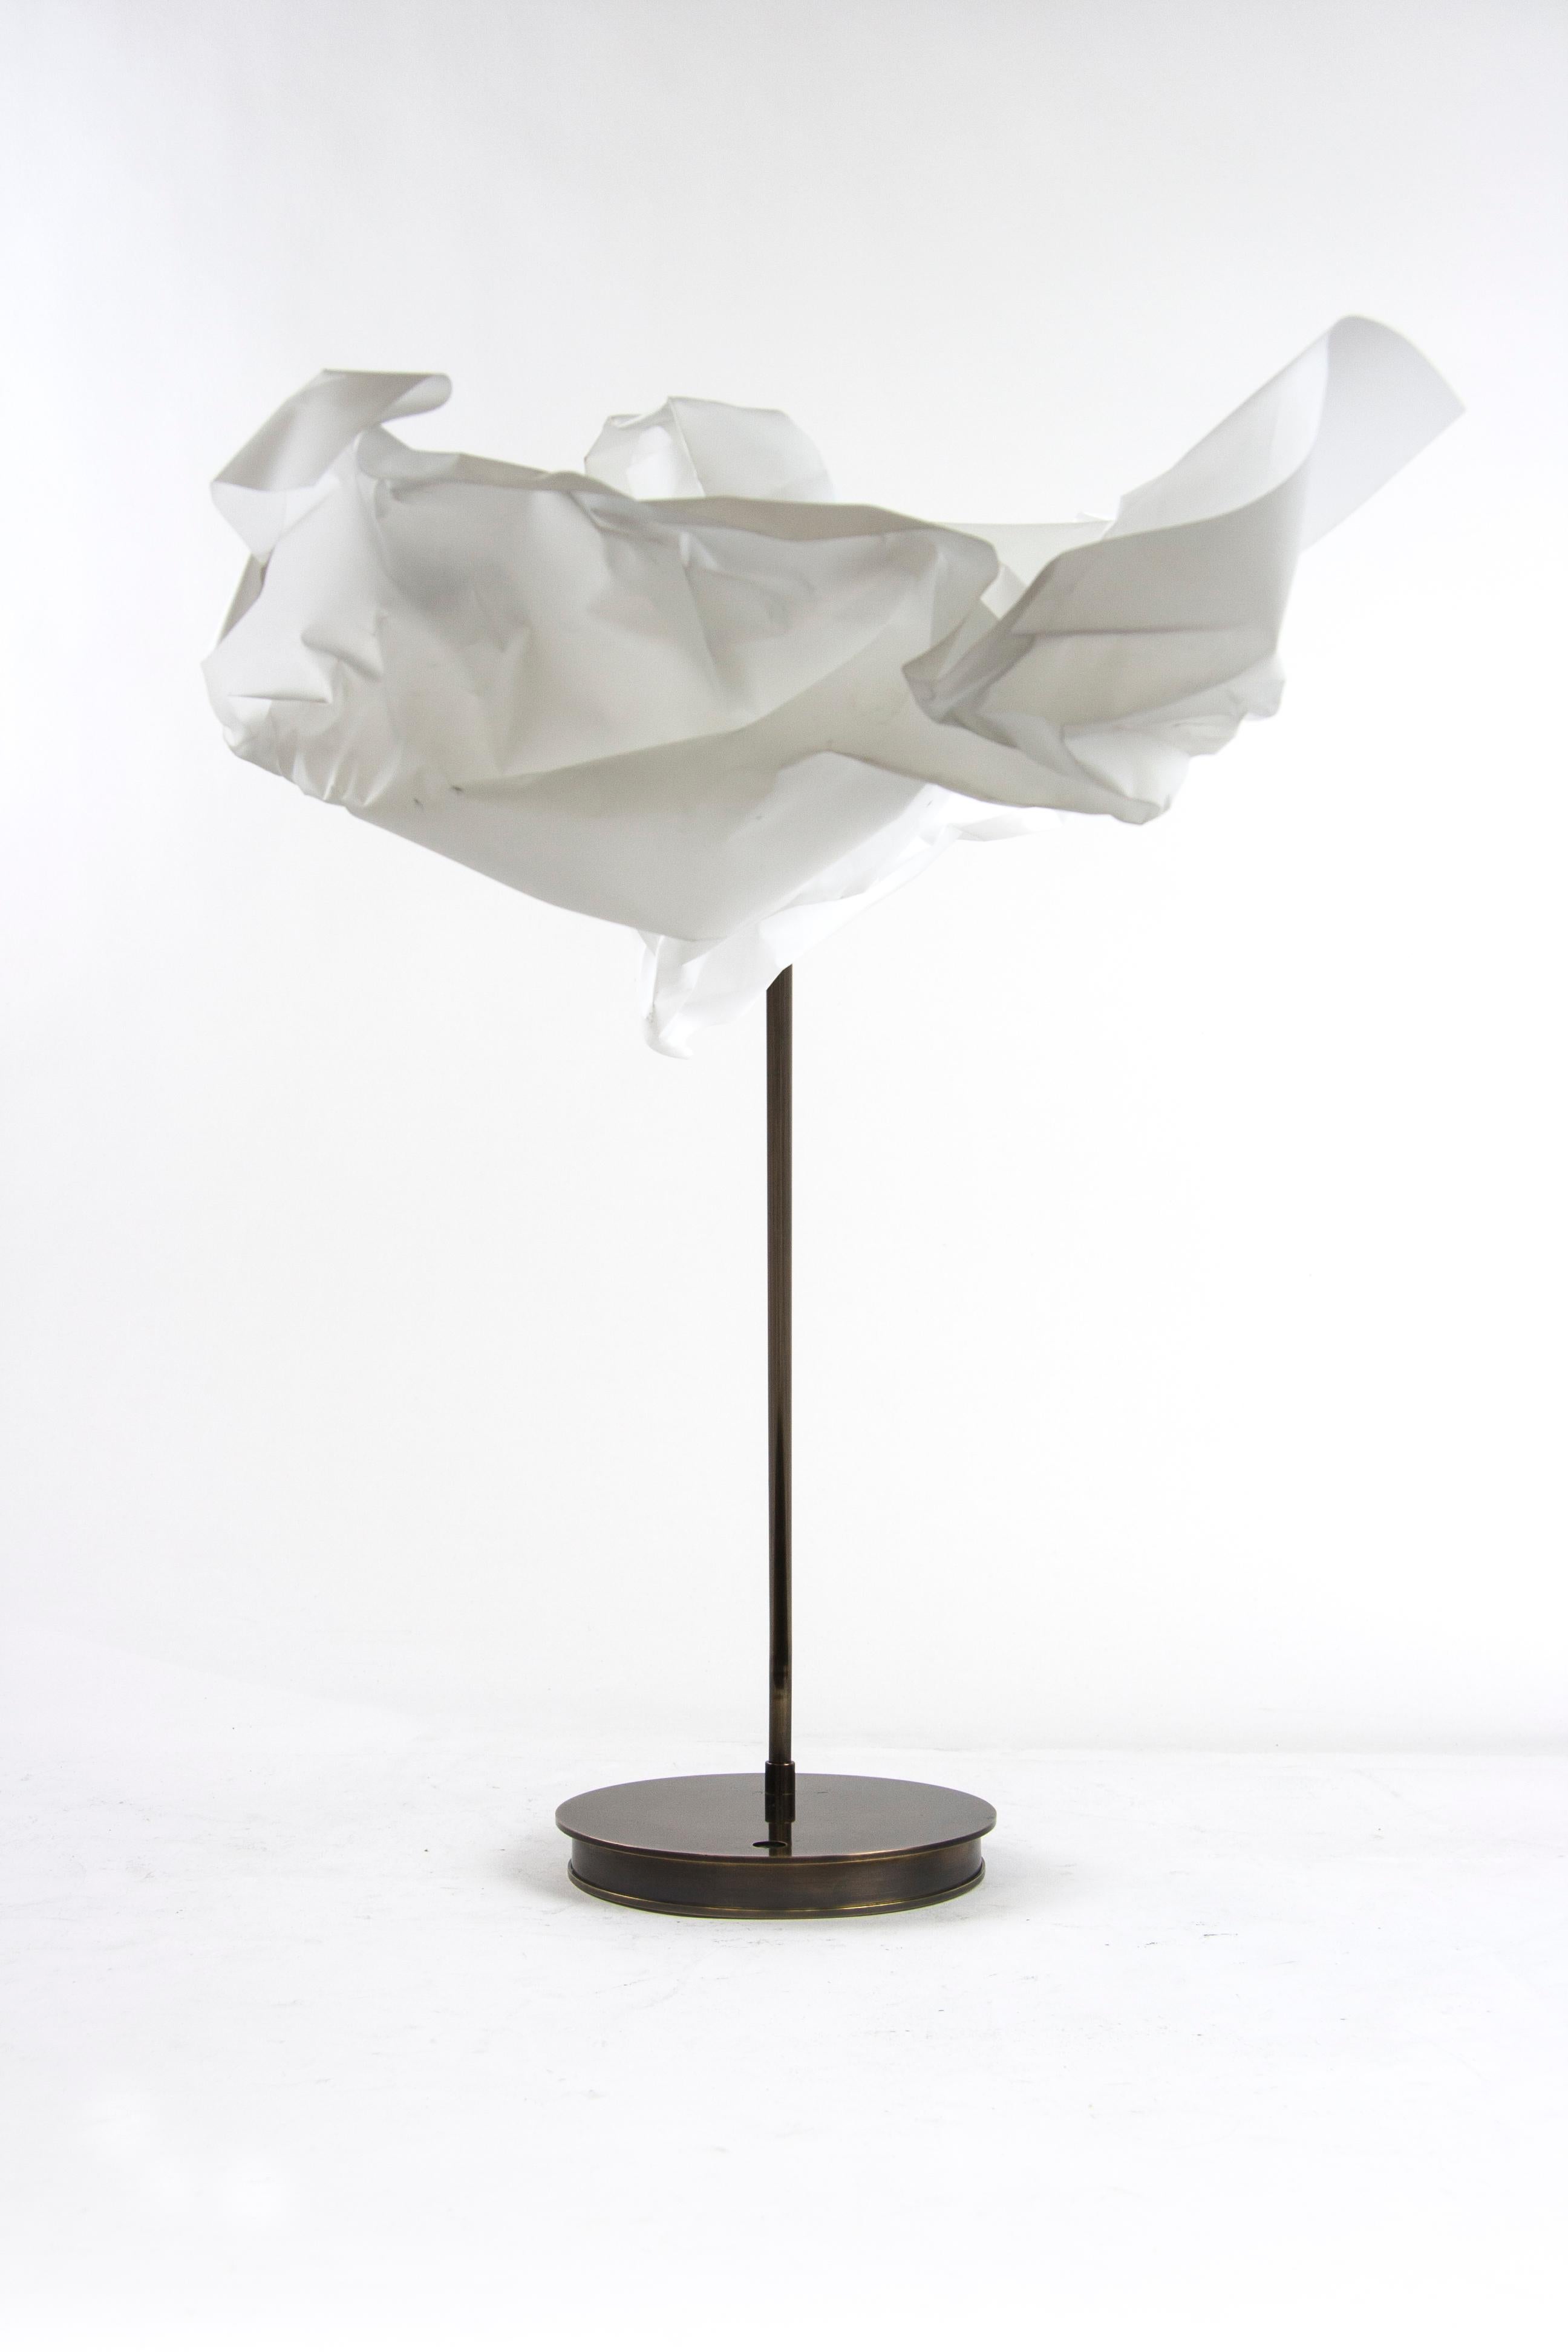 Other Paper Table Lamp by Gentner Design